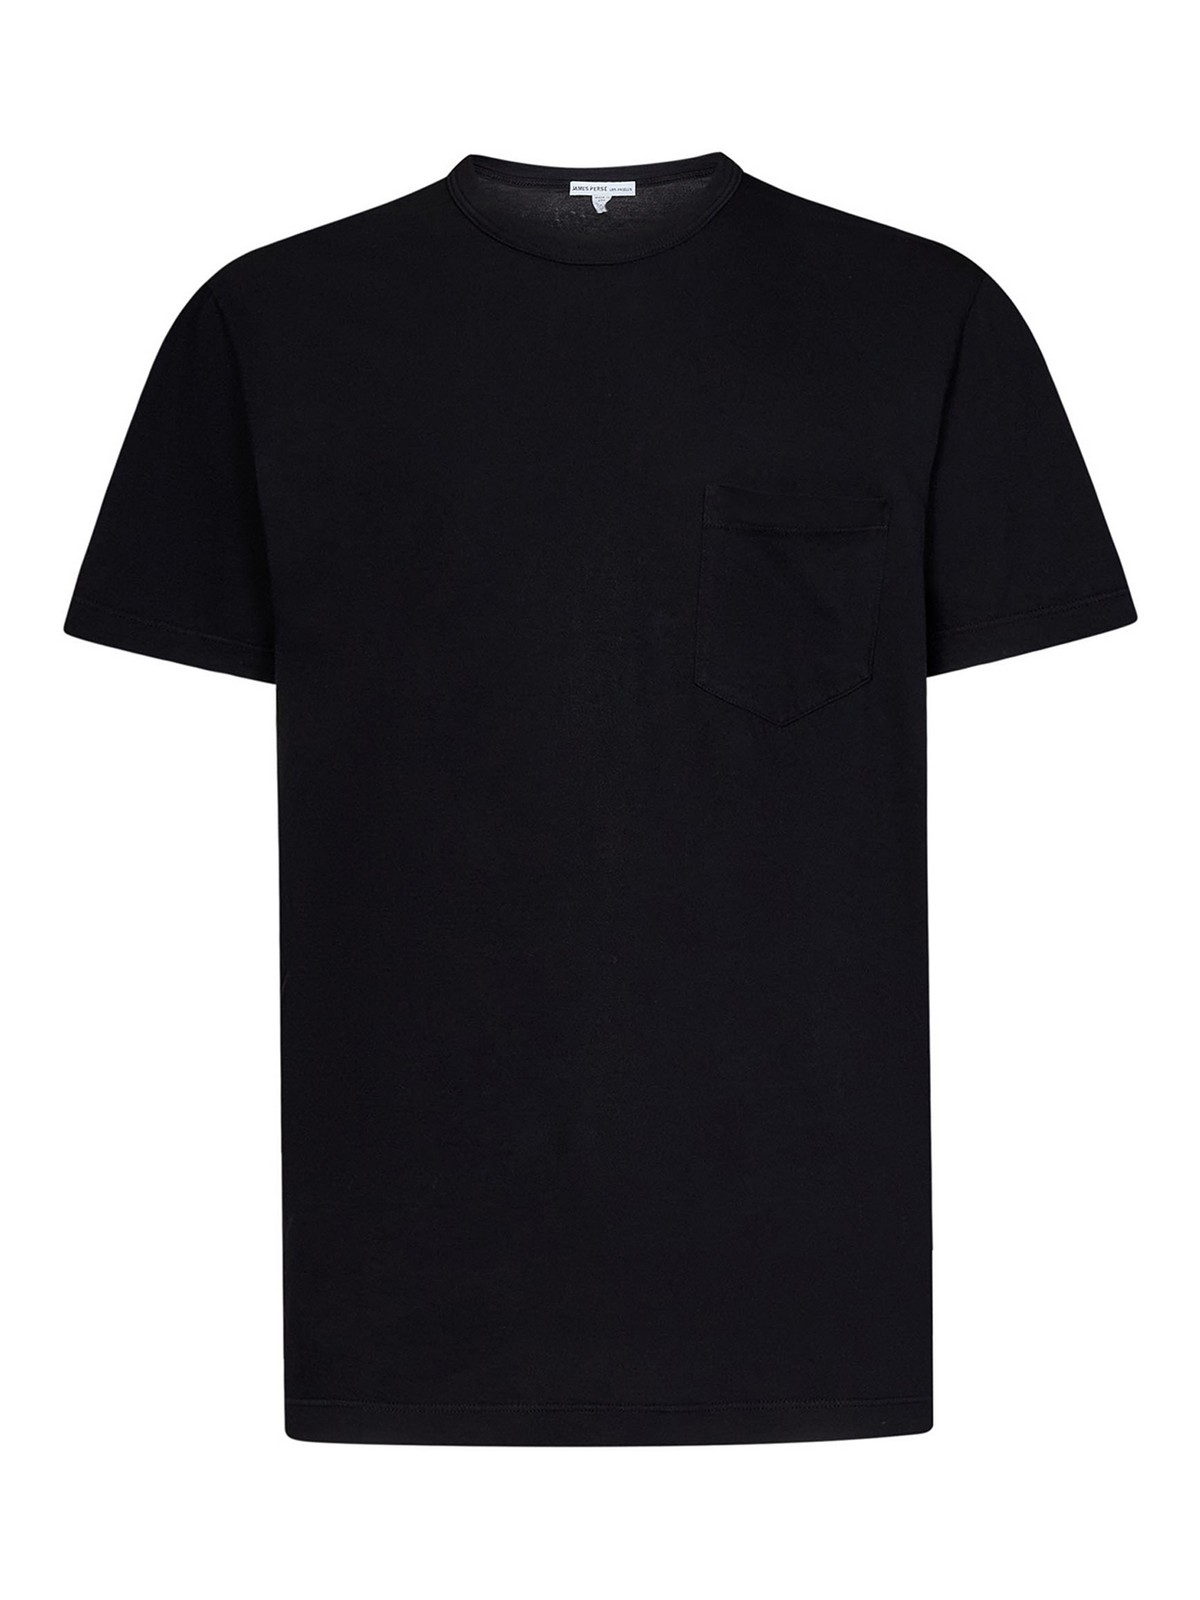 James Perse Black Classic-fit T-shirt